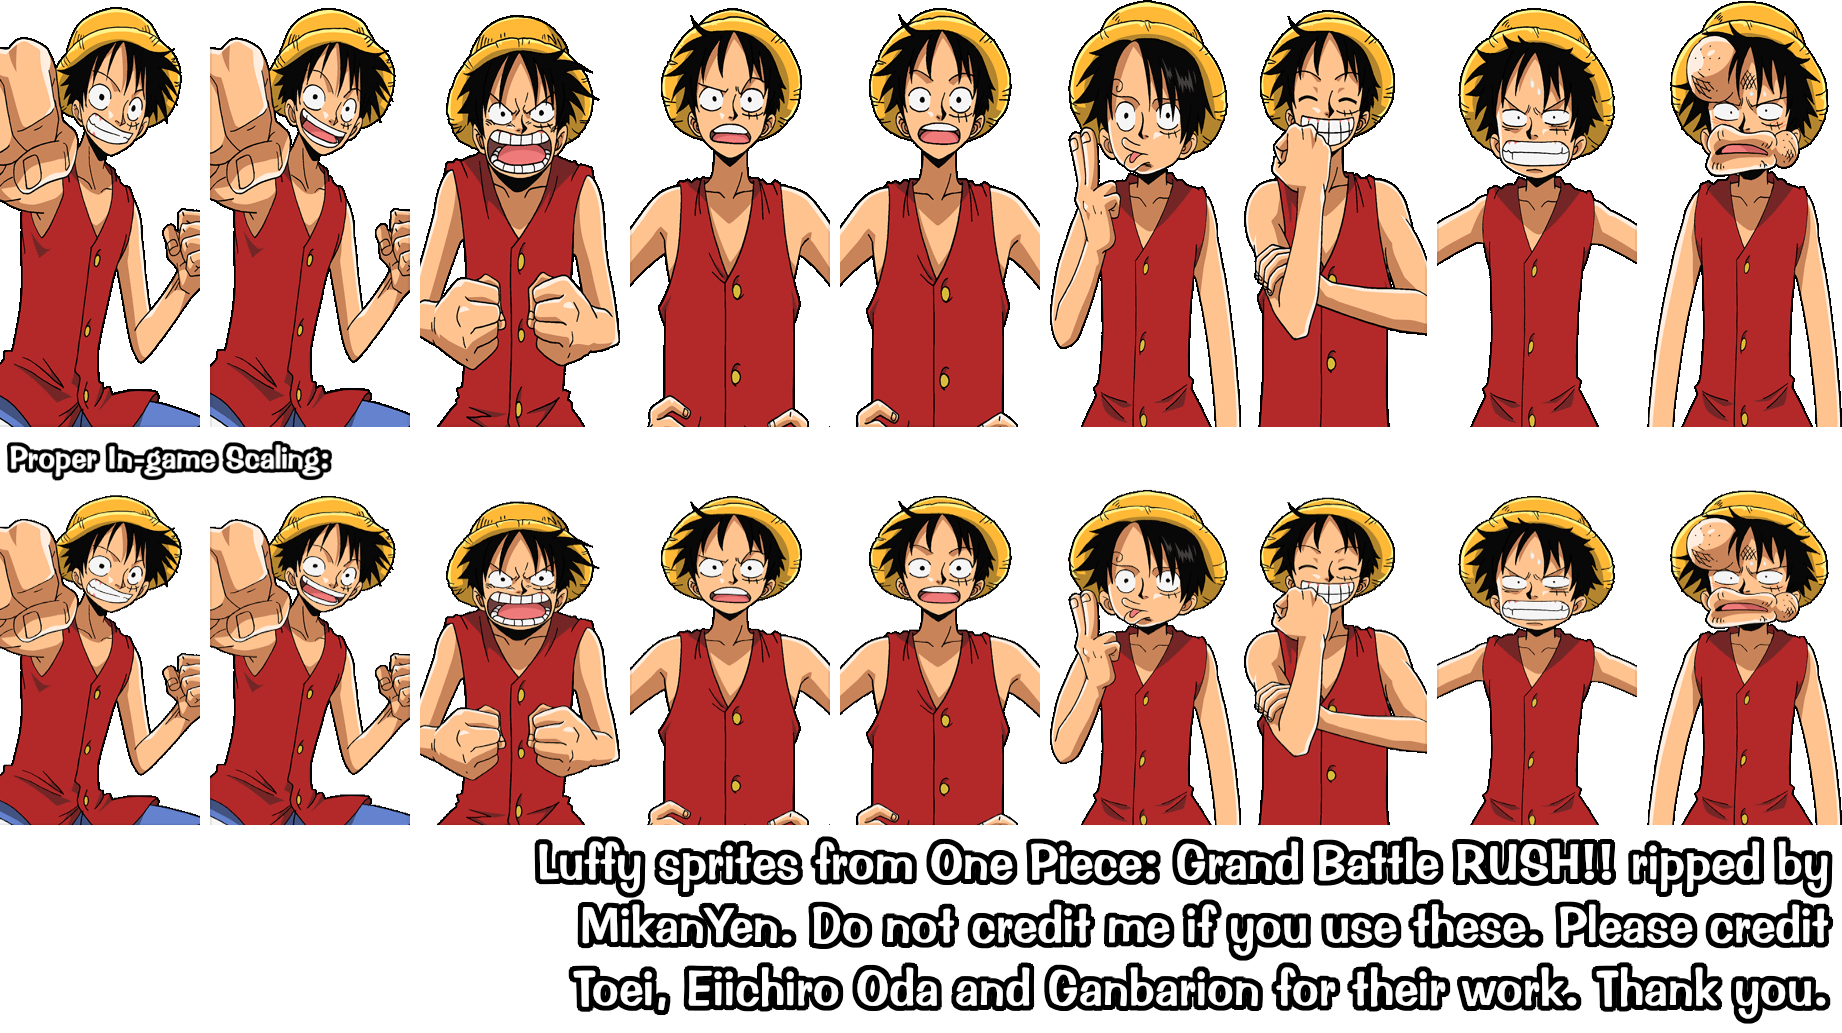 One Piece: Grand Battle RUSH!! - Monkey D. Luffy